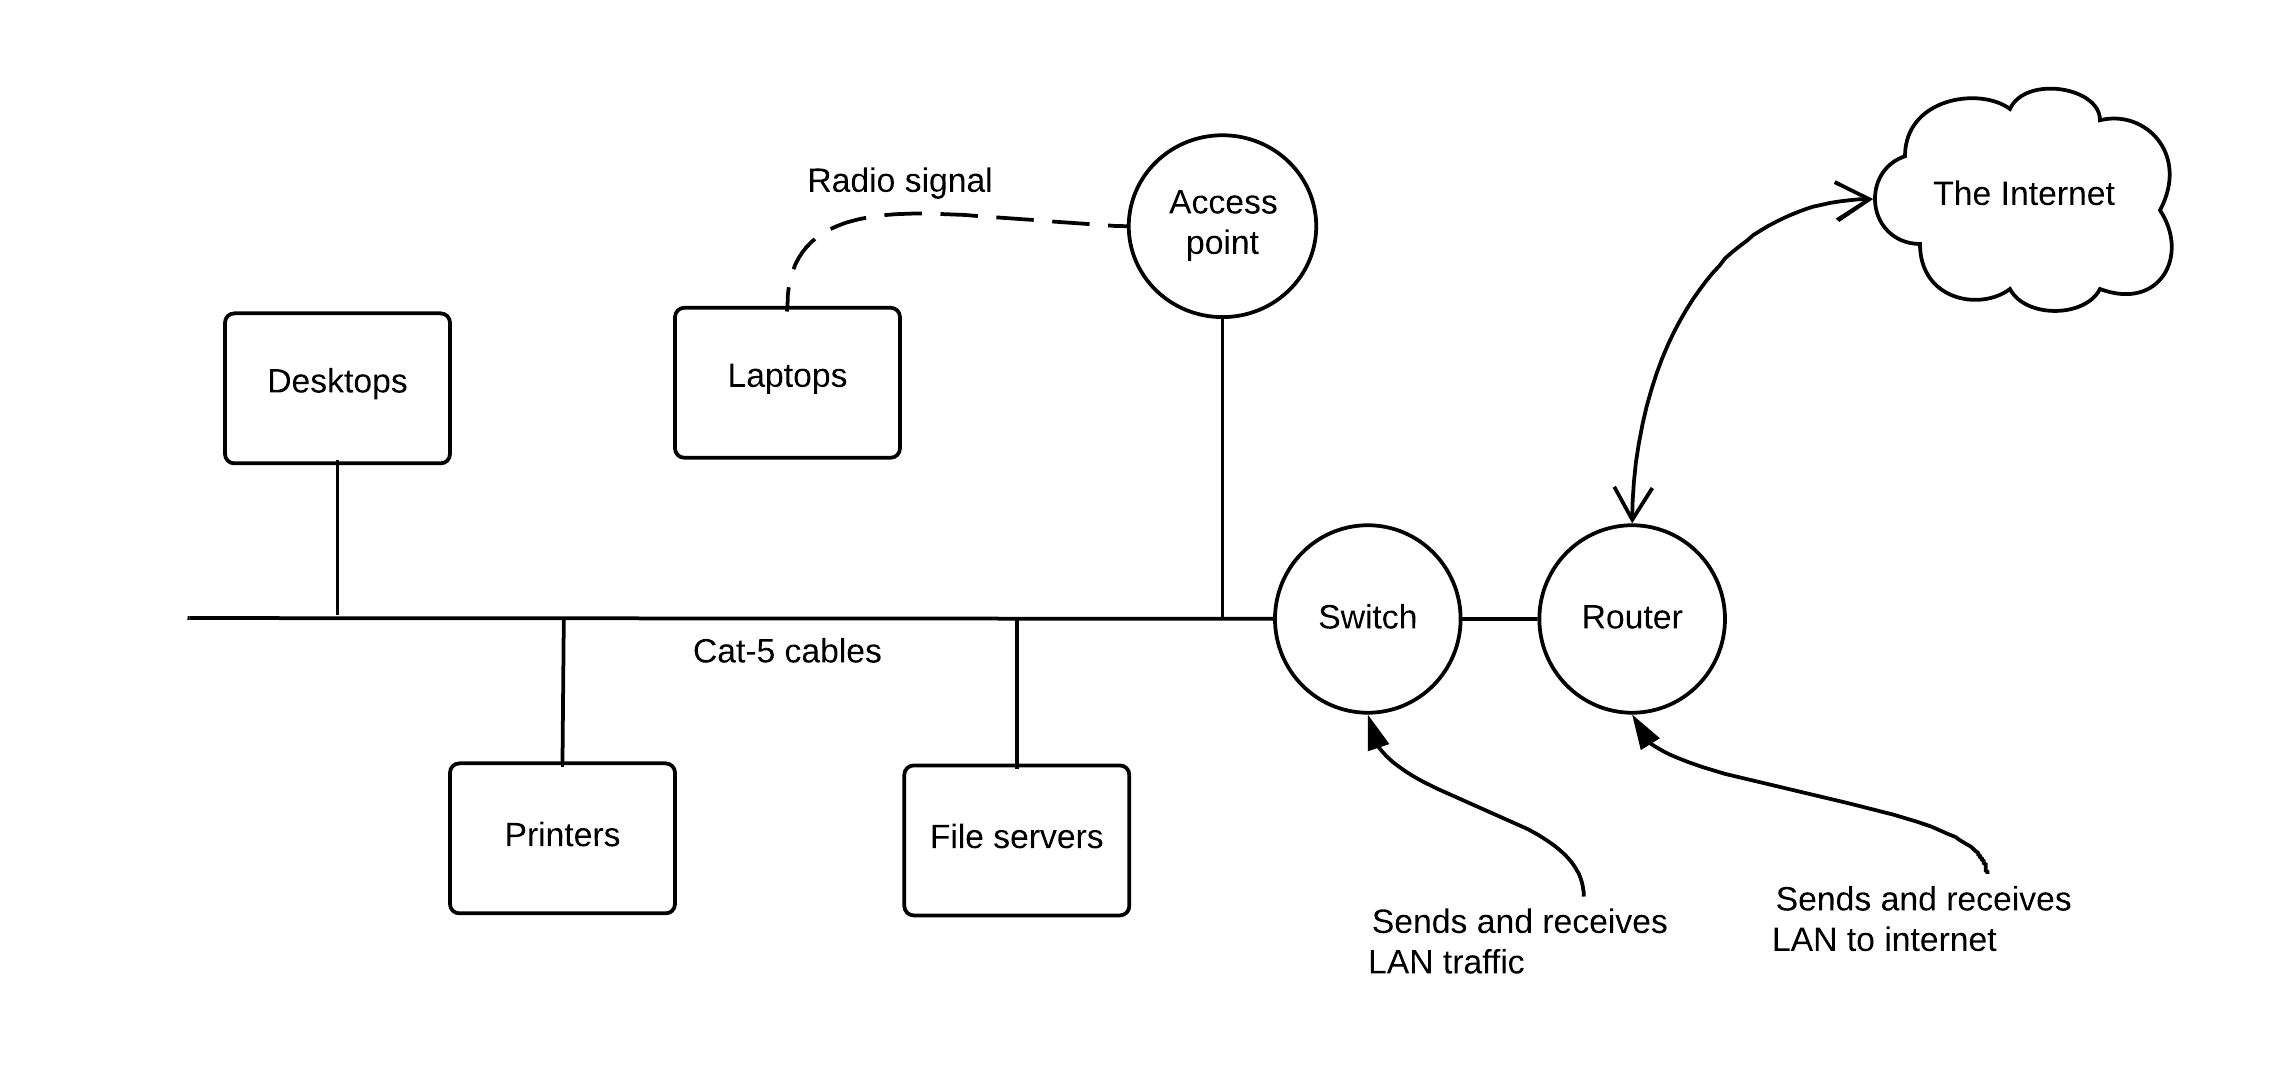 a common LAN configuration